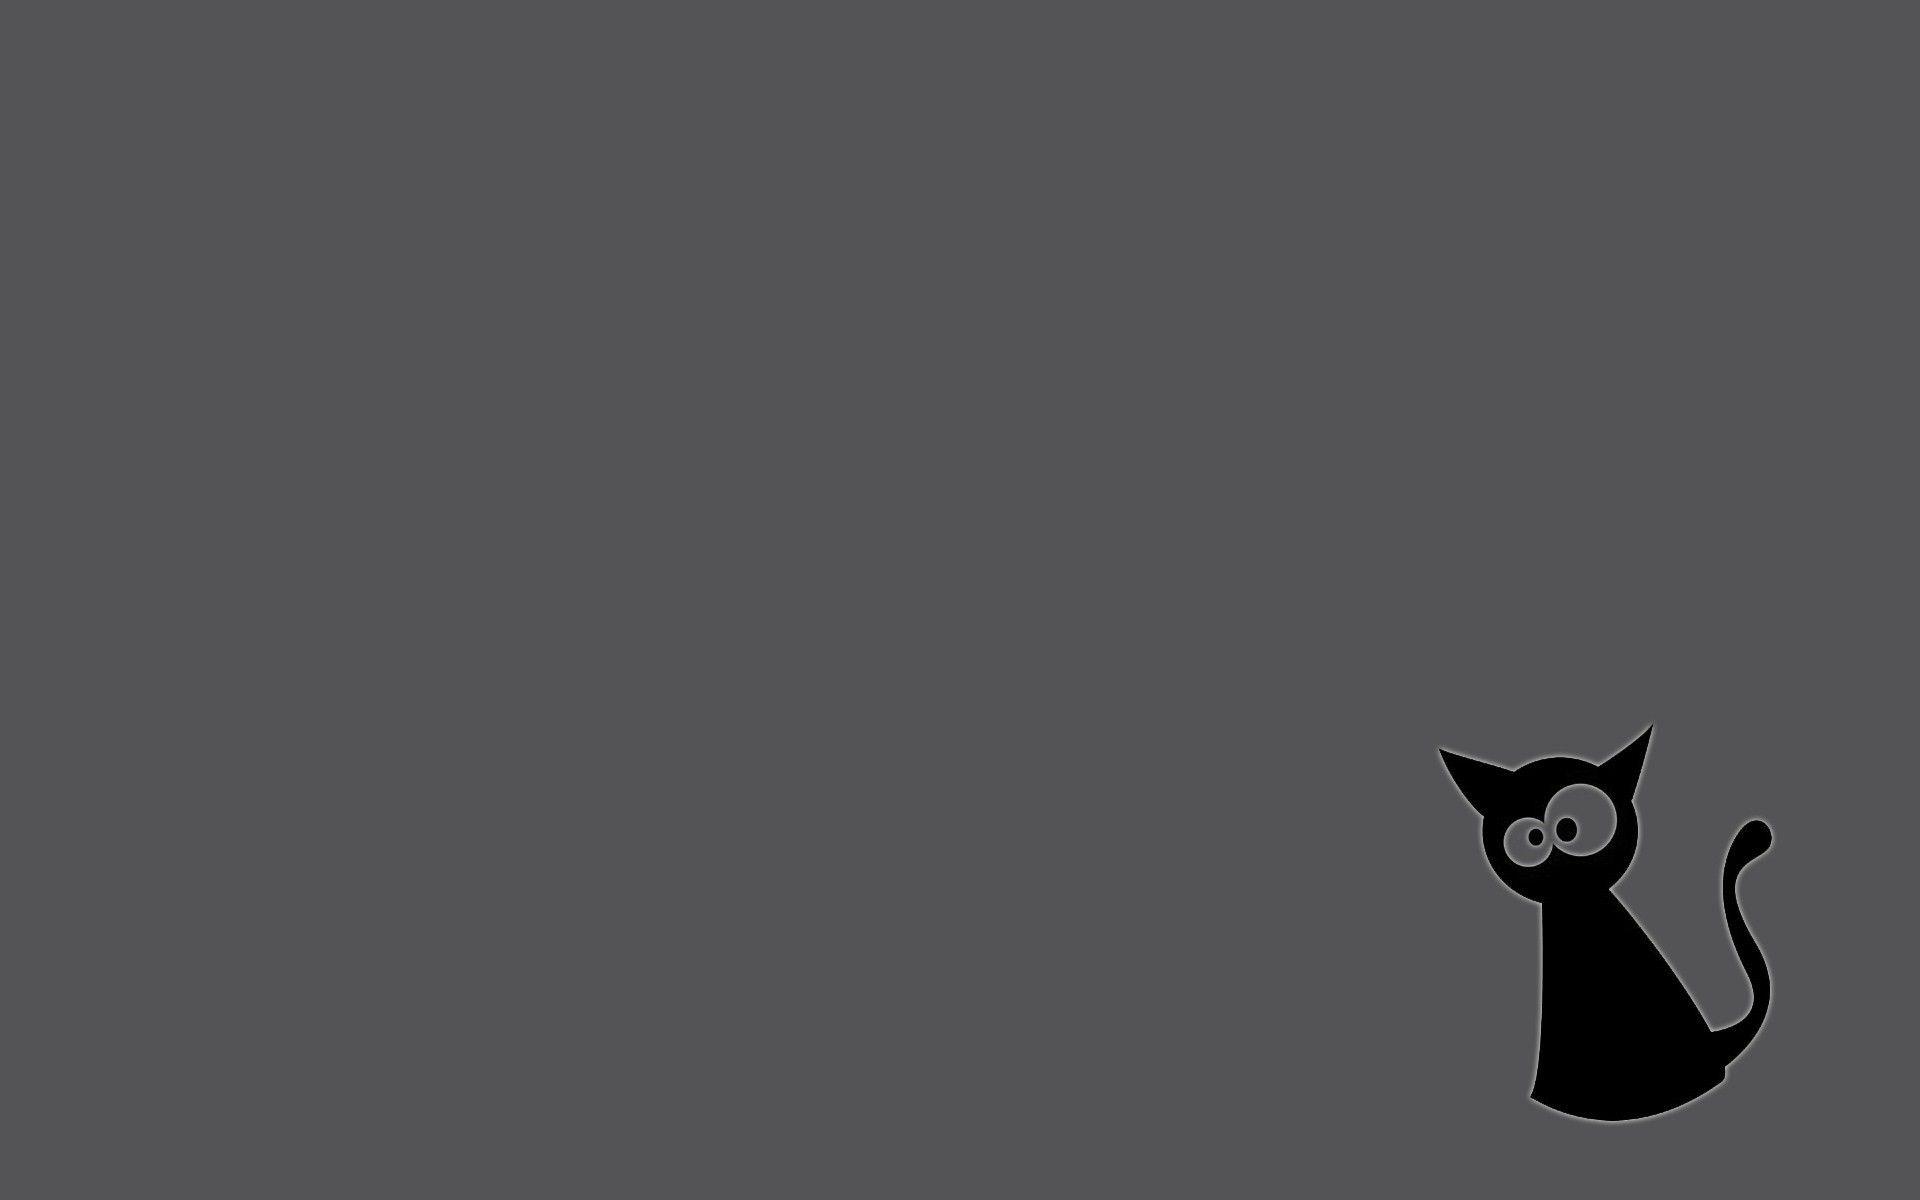 Aesthetic Black Cat Wallpapers - Top Free Aesthetic Black Cat ...